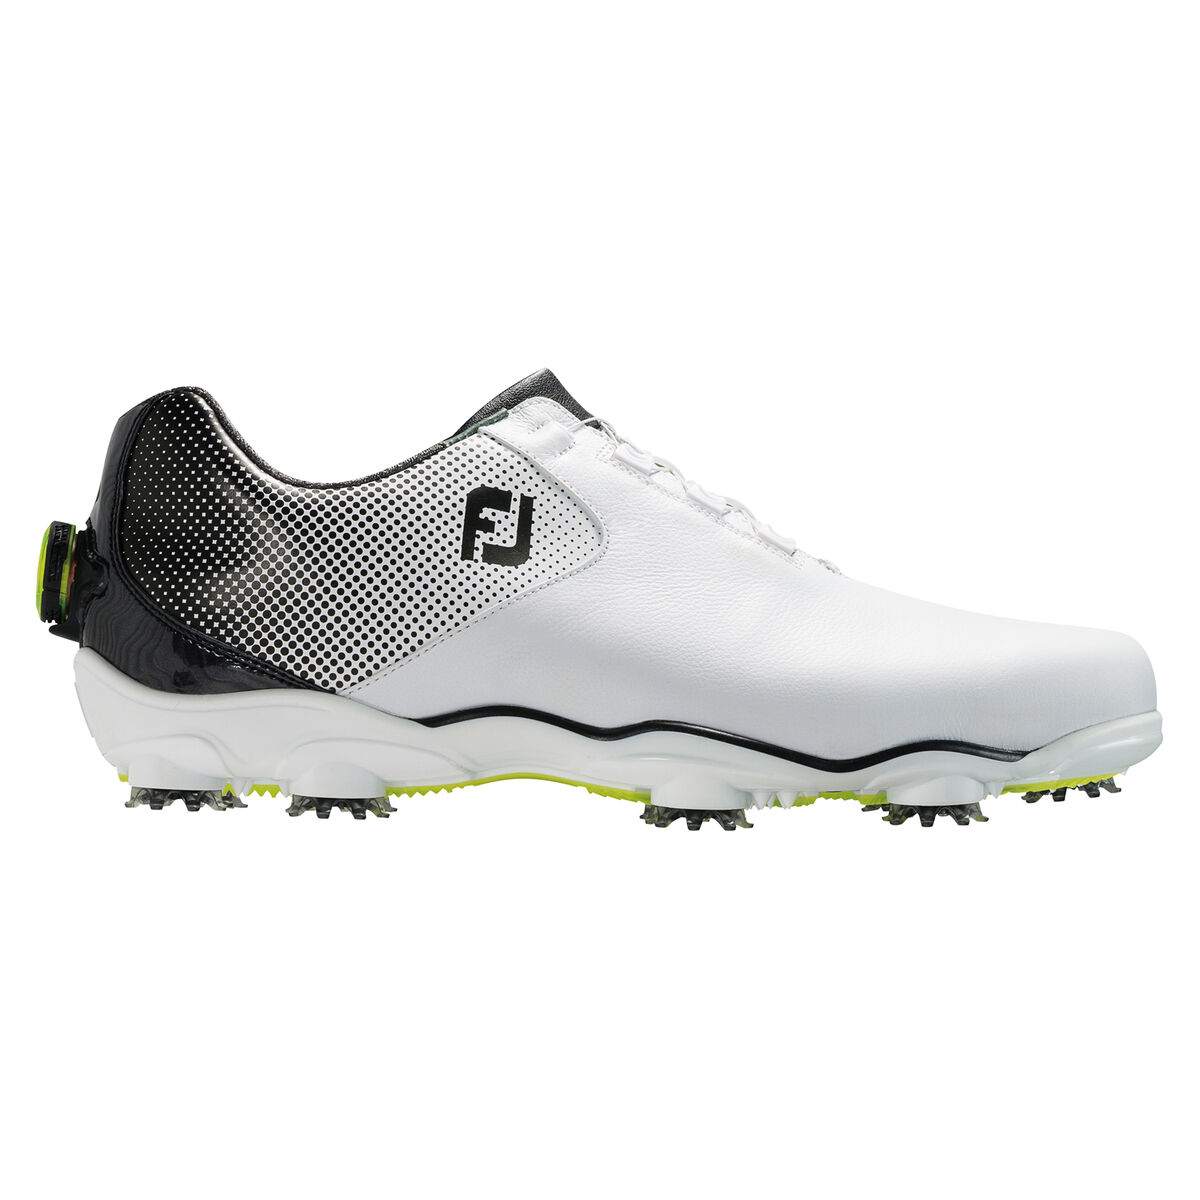 FootJoy D.N.A. Helix BOA Men's Golf Shoe - White/Black | PGA TOUR ...